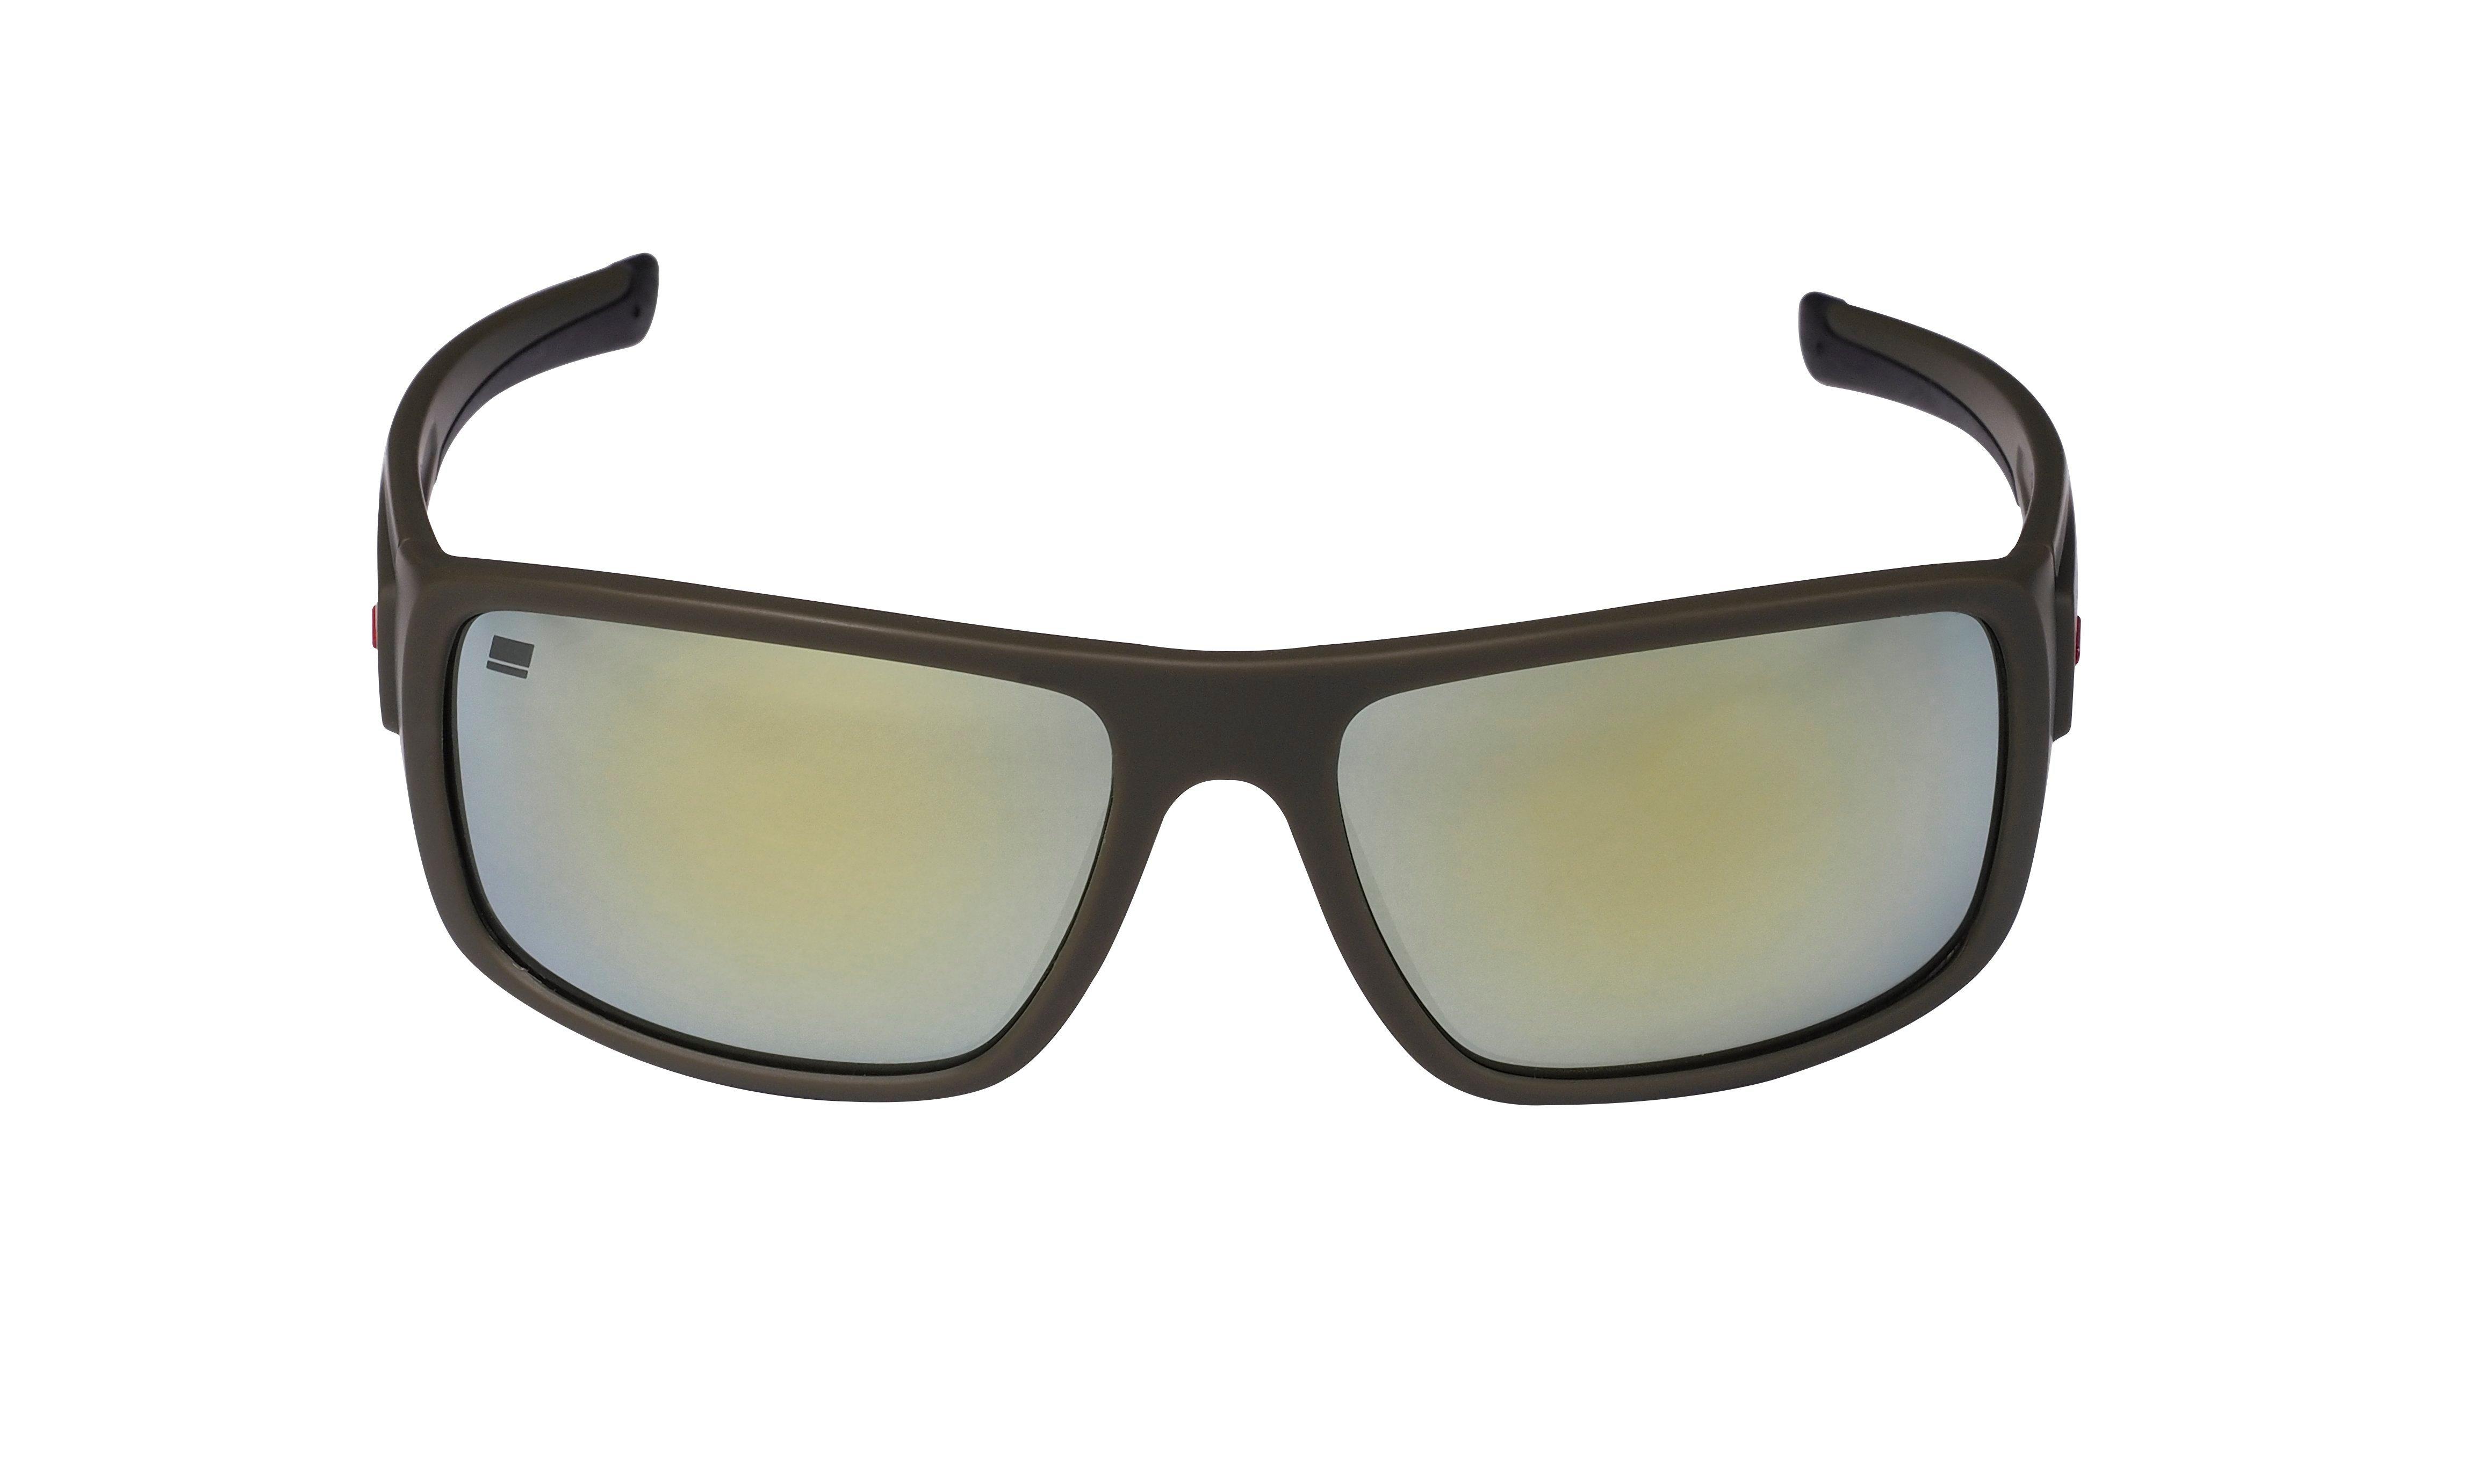 Abu Garcia Revo Eyewear Polarized Sunglasses - Gold Green